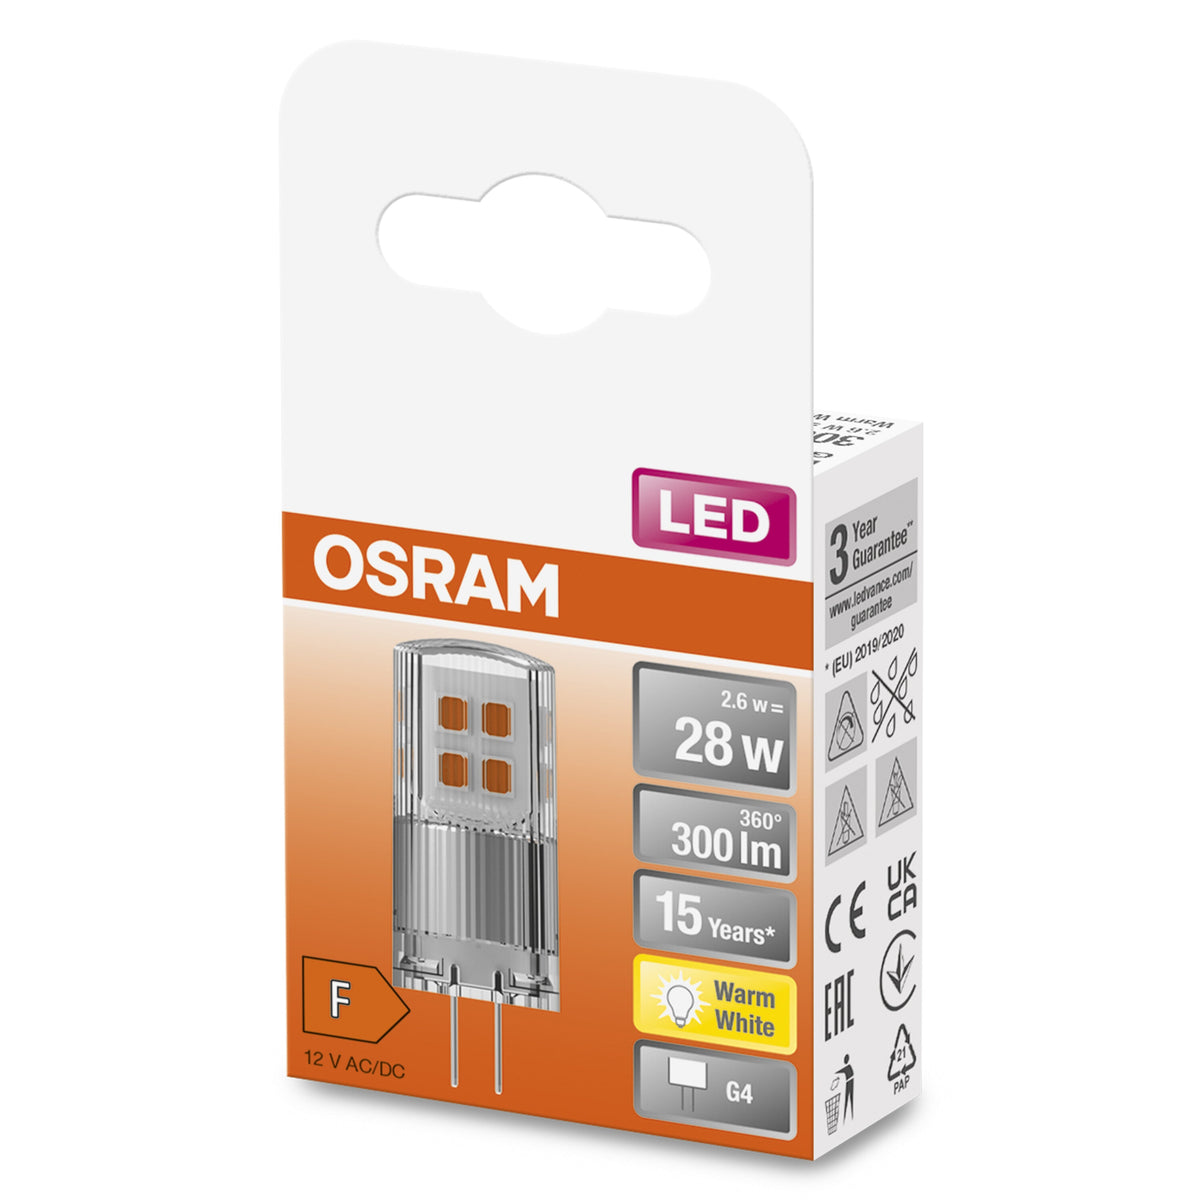 OSRAM LED Base lampe à culot à broches lampe LED 12V (ex 30W) 2,6W / 2700K blanc chaud PIN G4